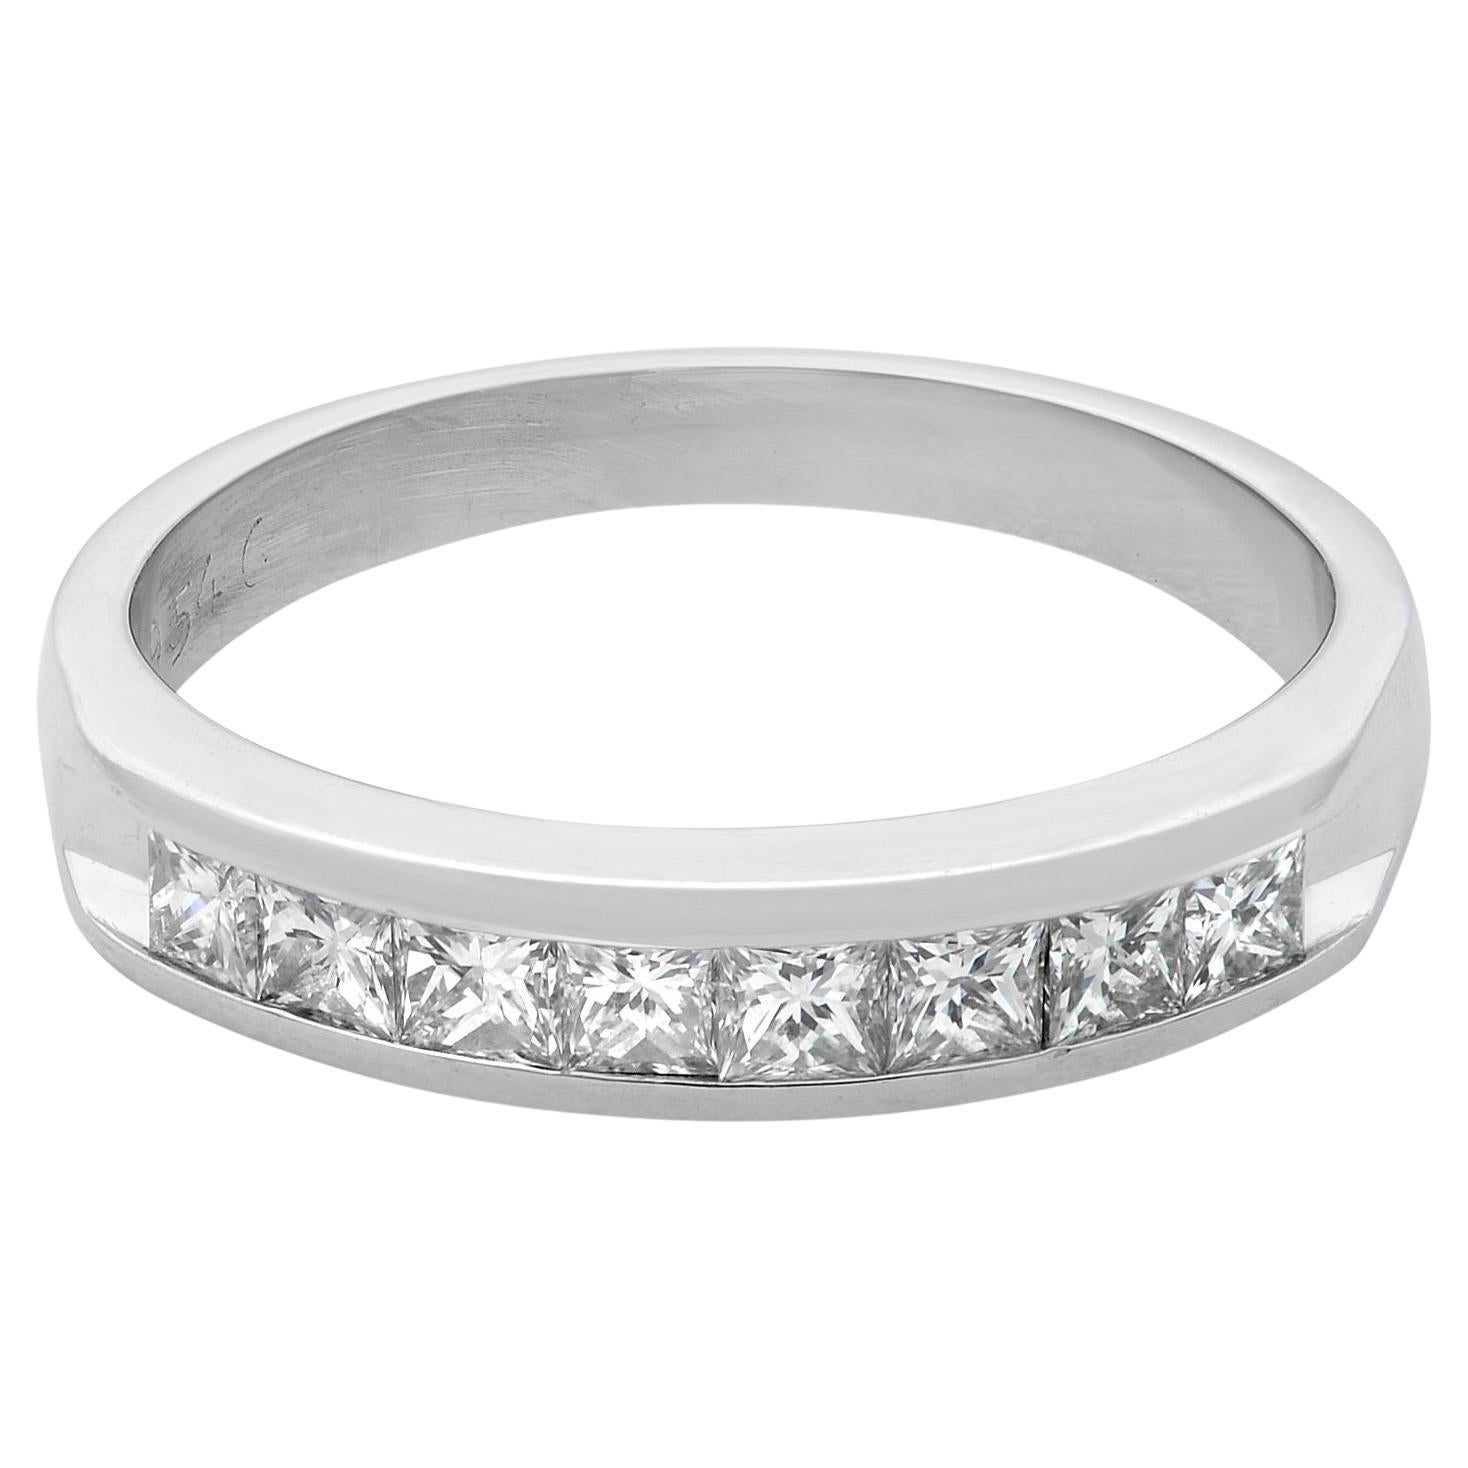 Rachel Koen Princess Cut Diamond Wedding Band Platinum 0.40Cttw Size 5.5 For Sale